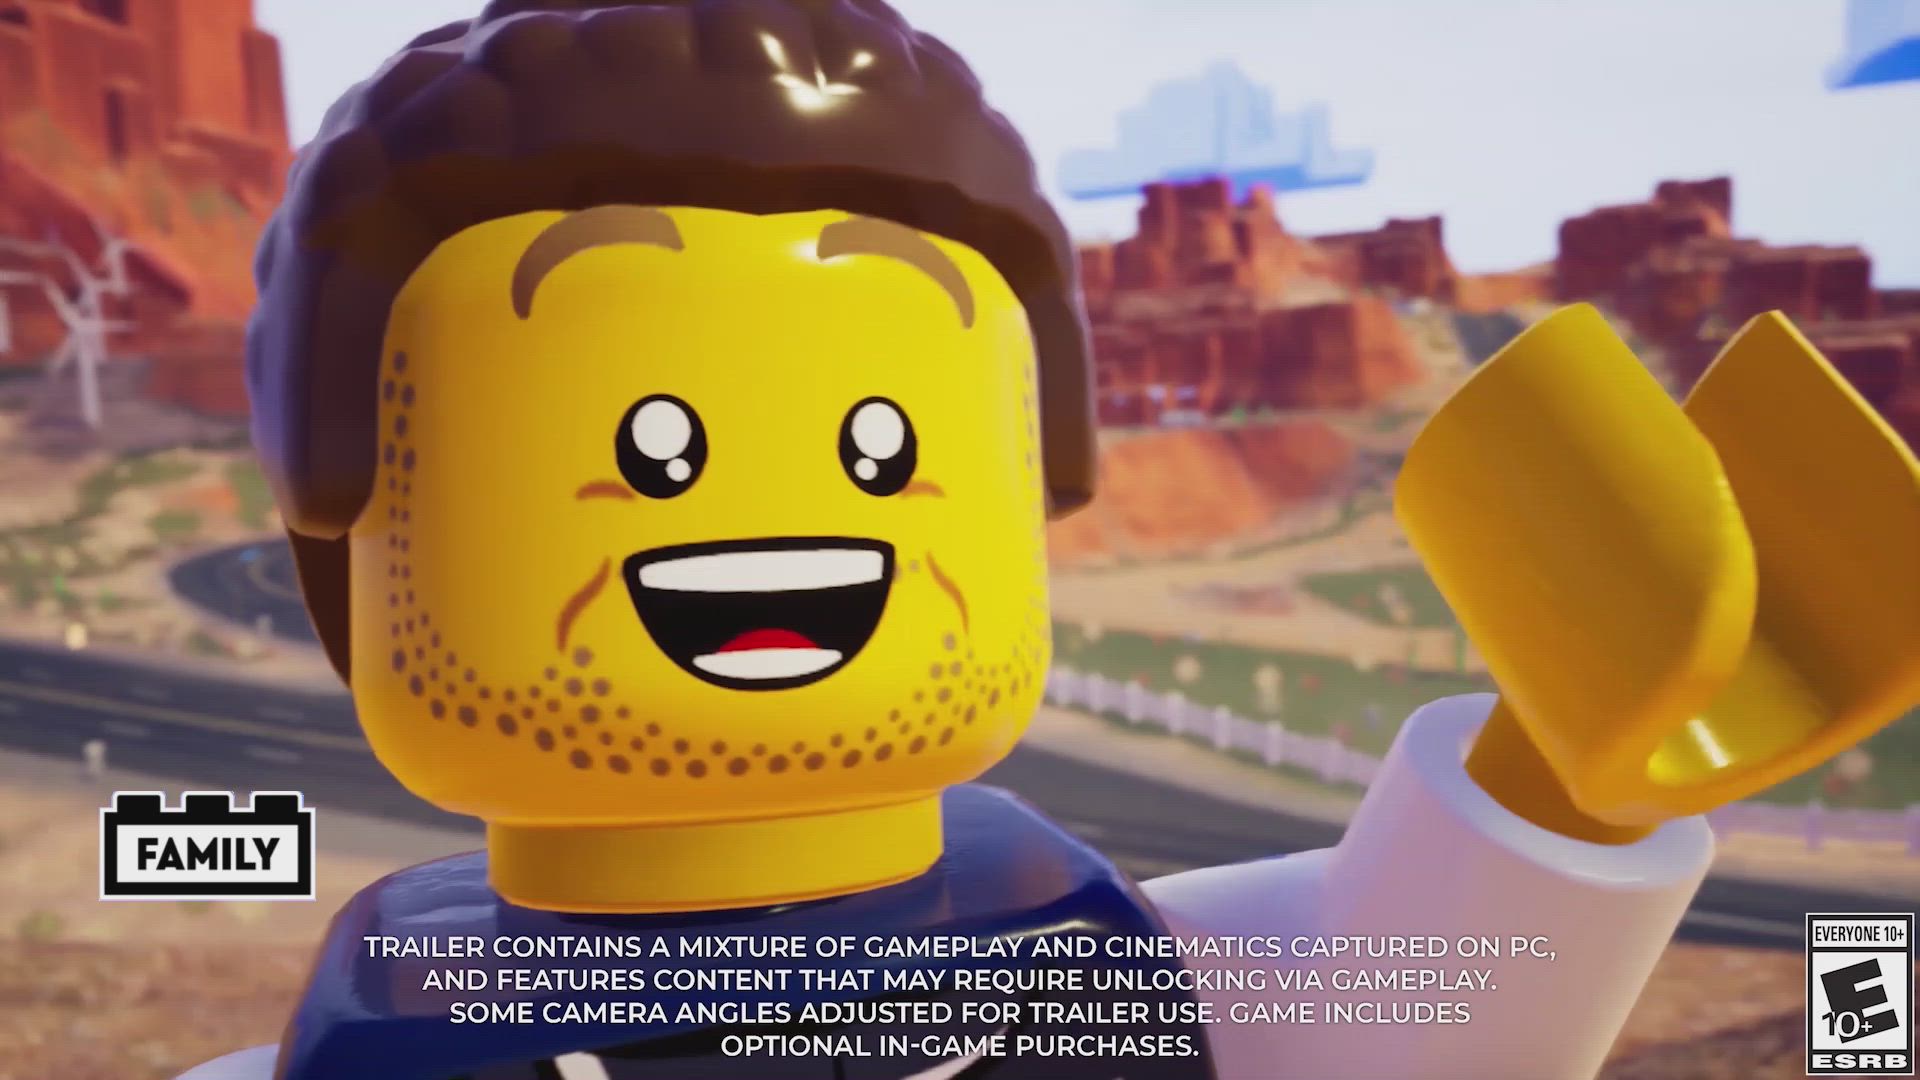 LEGO® 2K Drive  Baixe e compre hoje - Epic Games Store